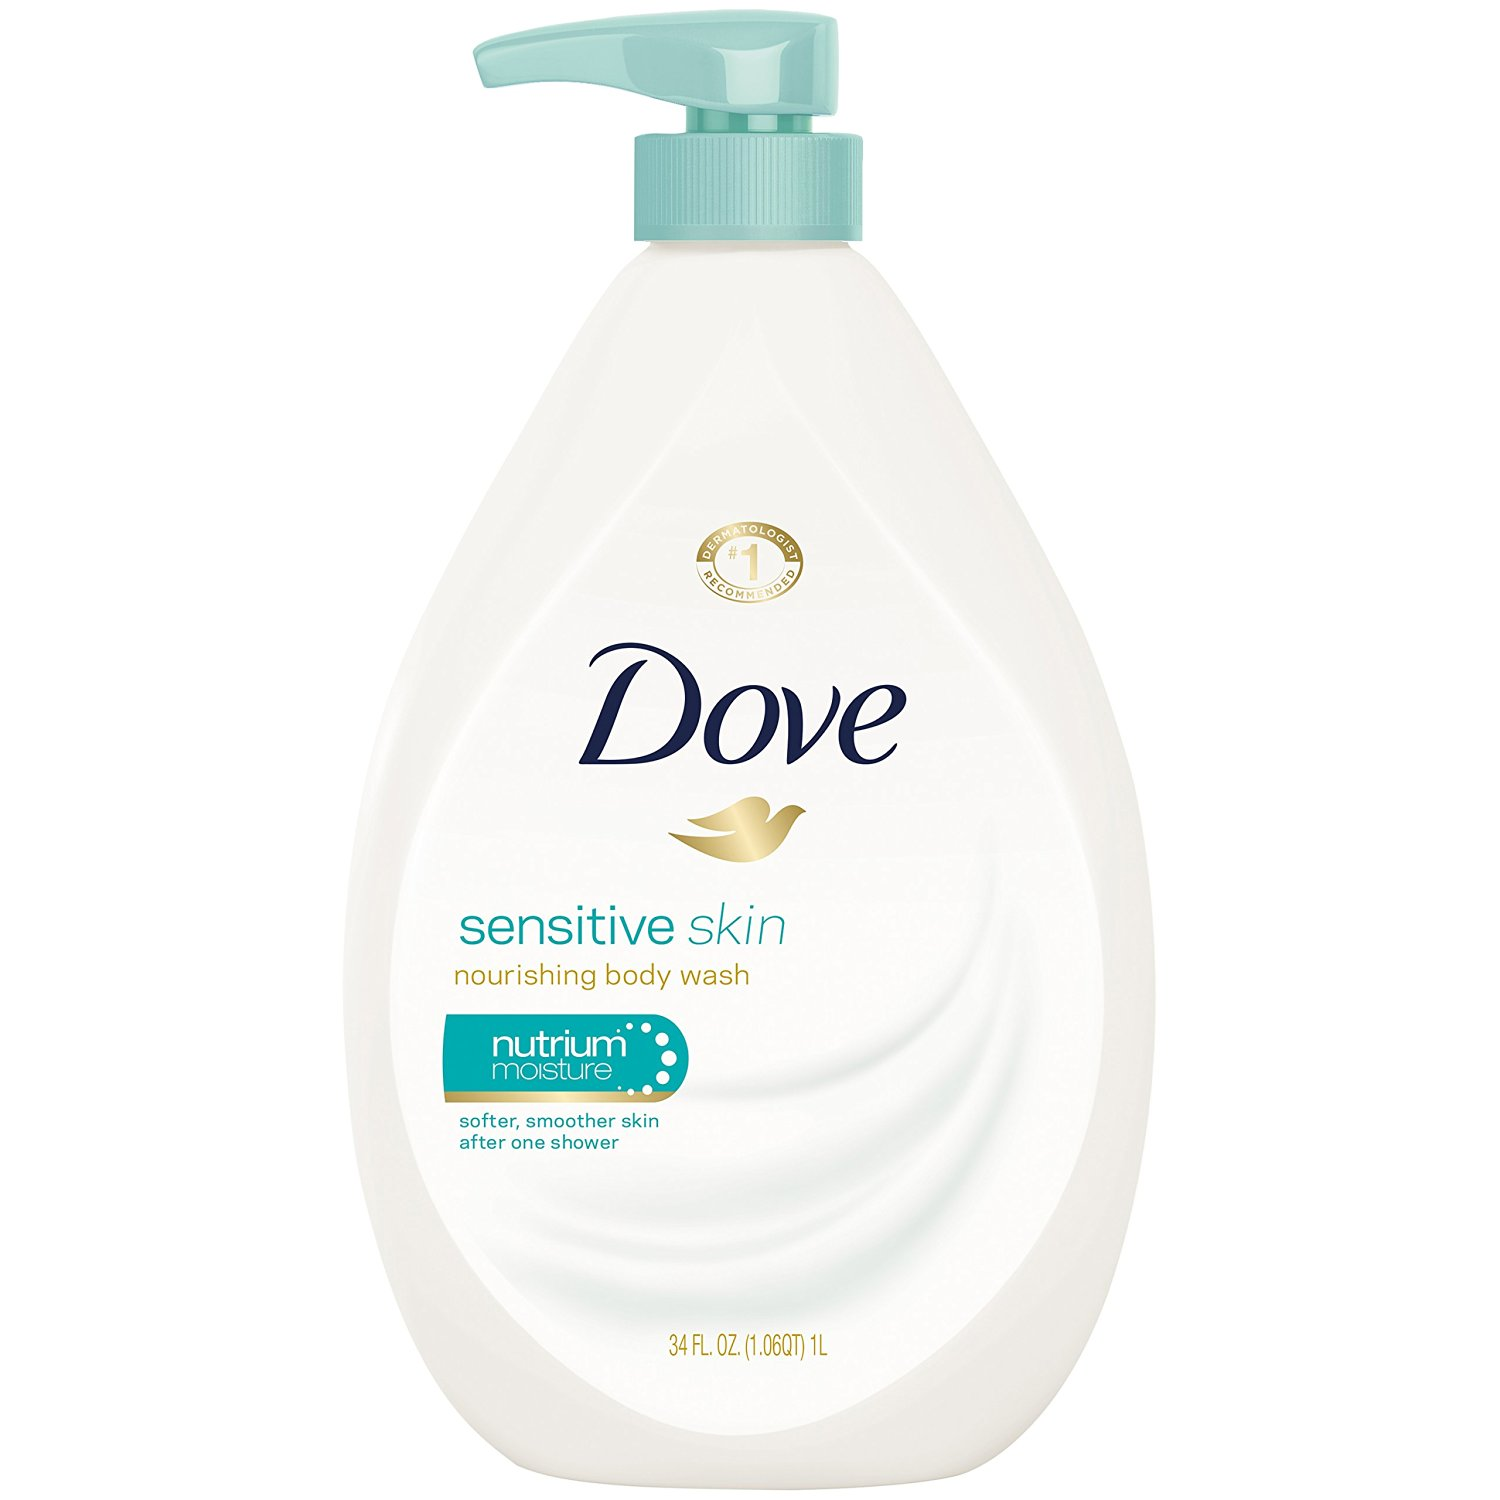 Dove Body Wash (Sensitive Skin) Pump 34oz Only $5.54 Shipped!